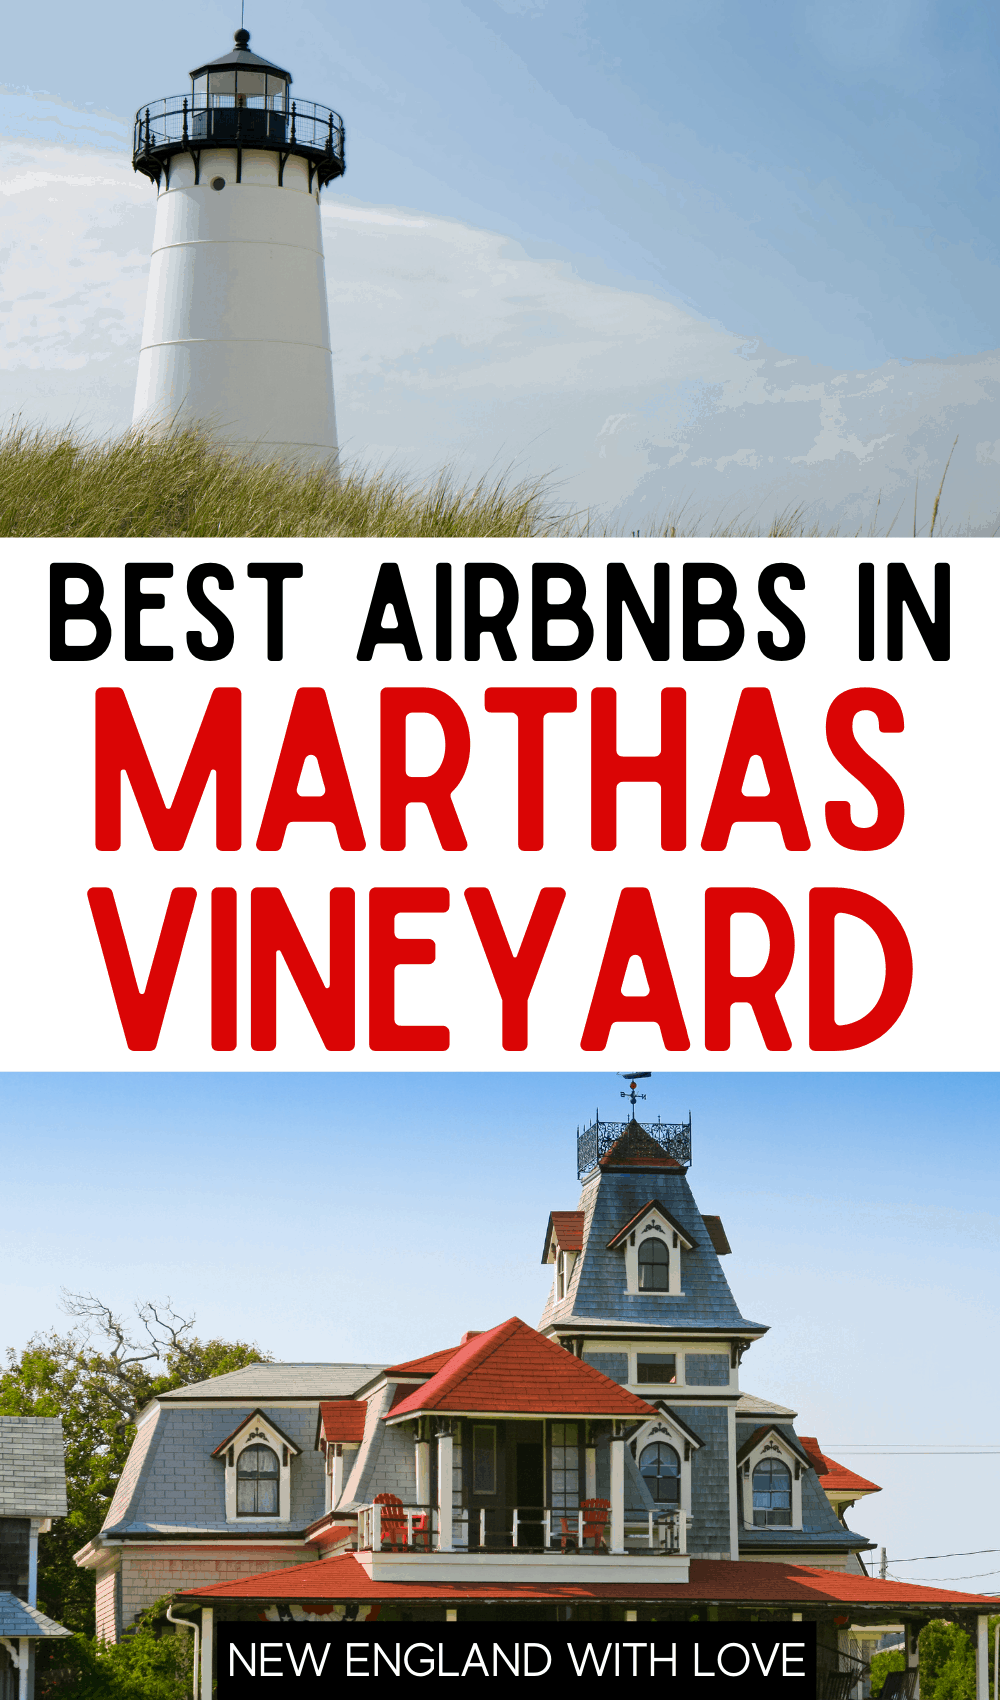 Pinterest graphic reading "BEST AIRBNBS IN MARTHAS VINEYARD"